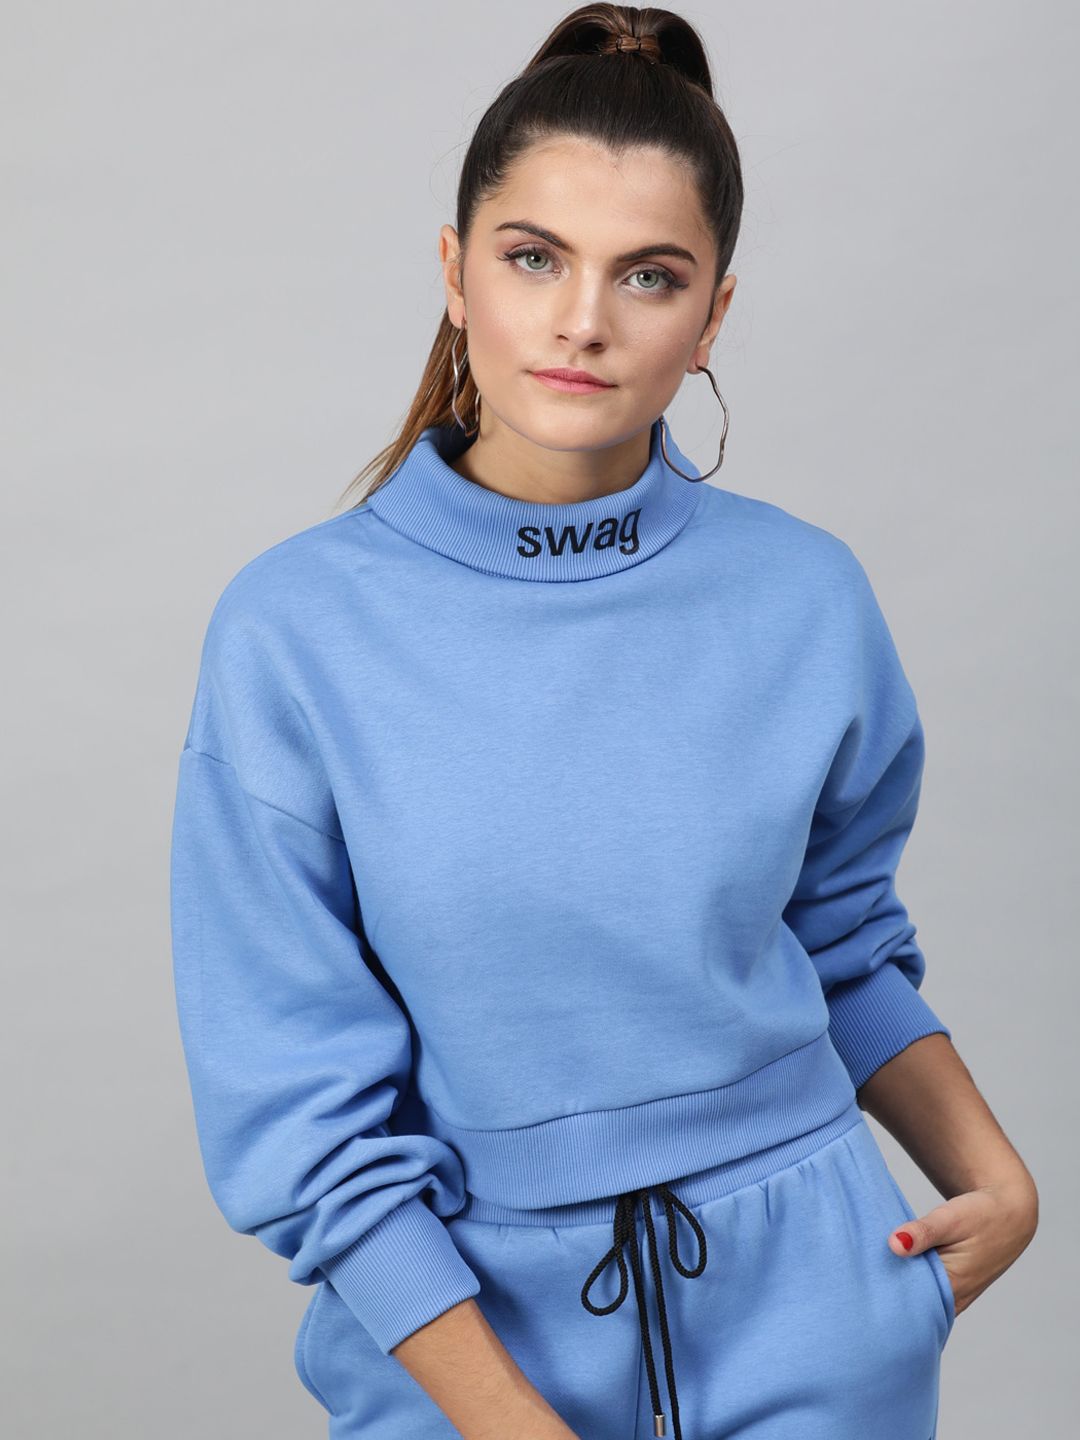 STREET 9 Women Blue Solid Sweatshirt Price in India